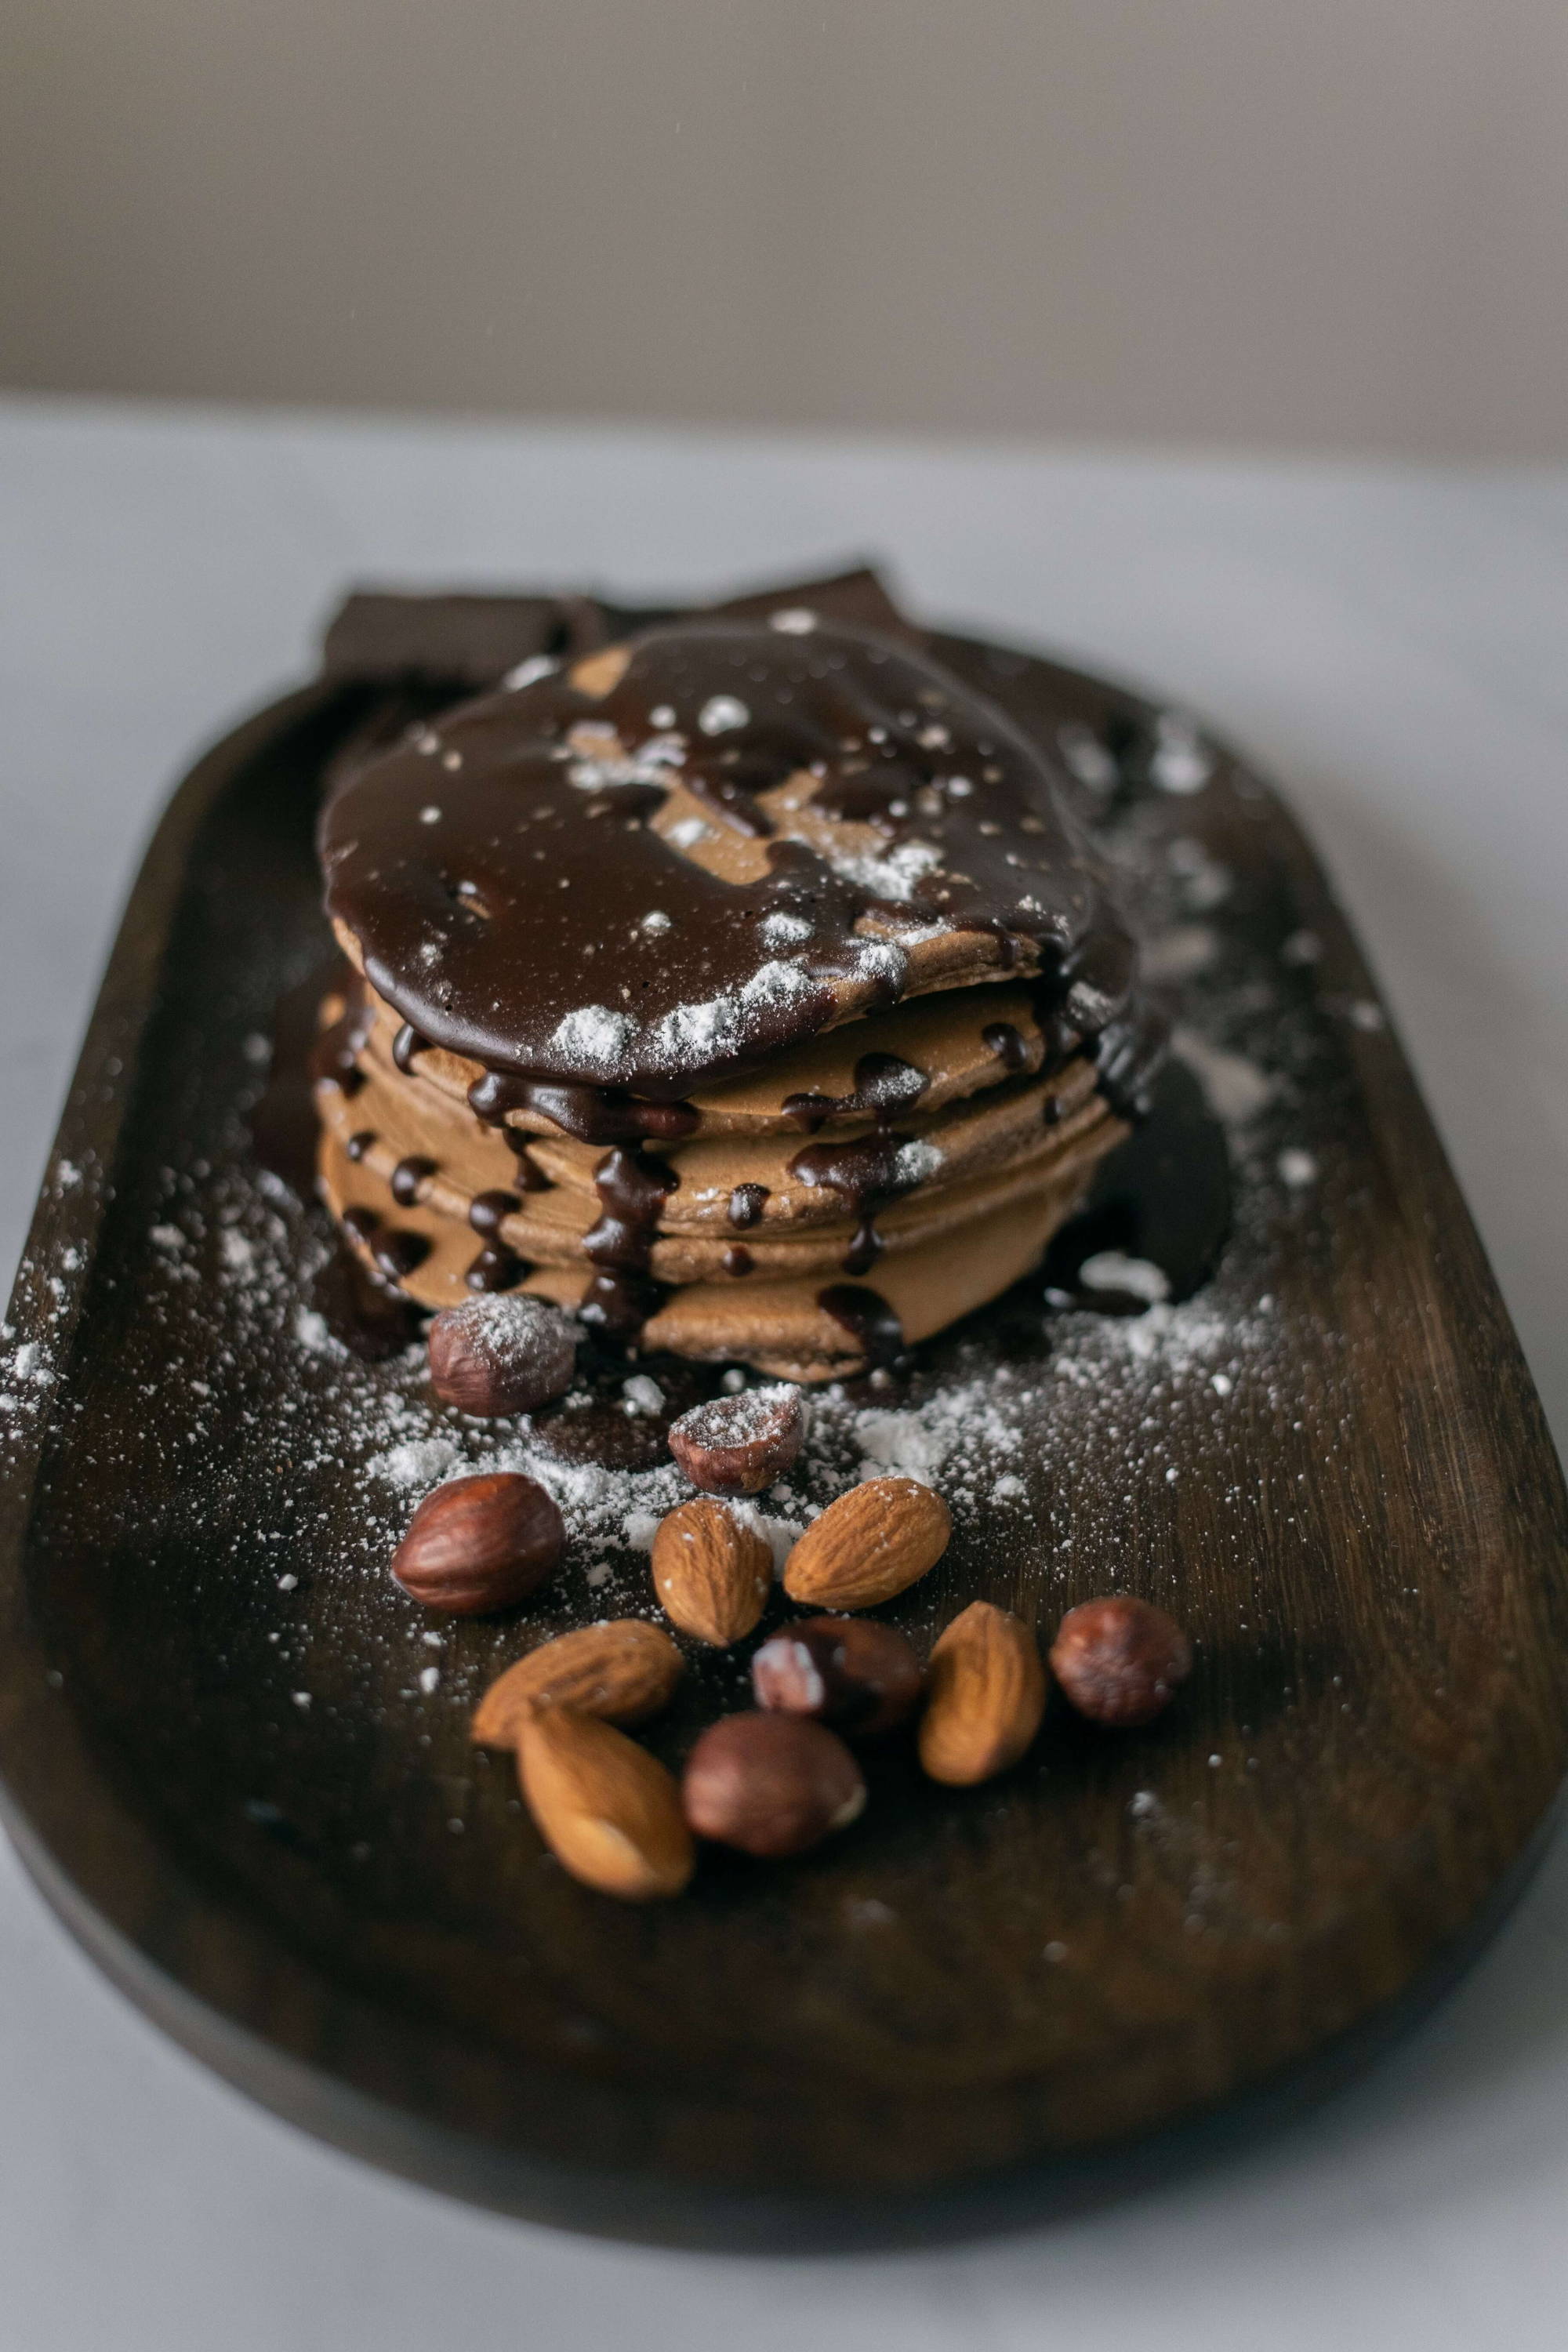 Chocolate pancake with almonds